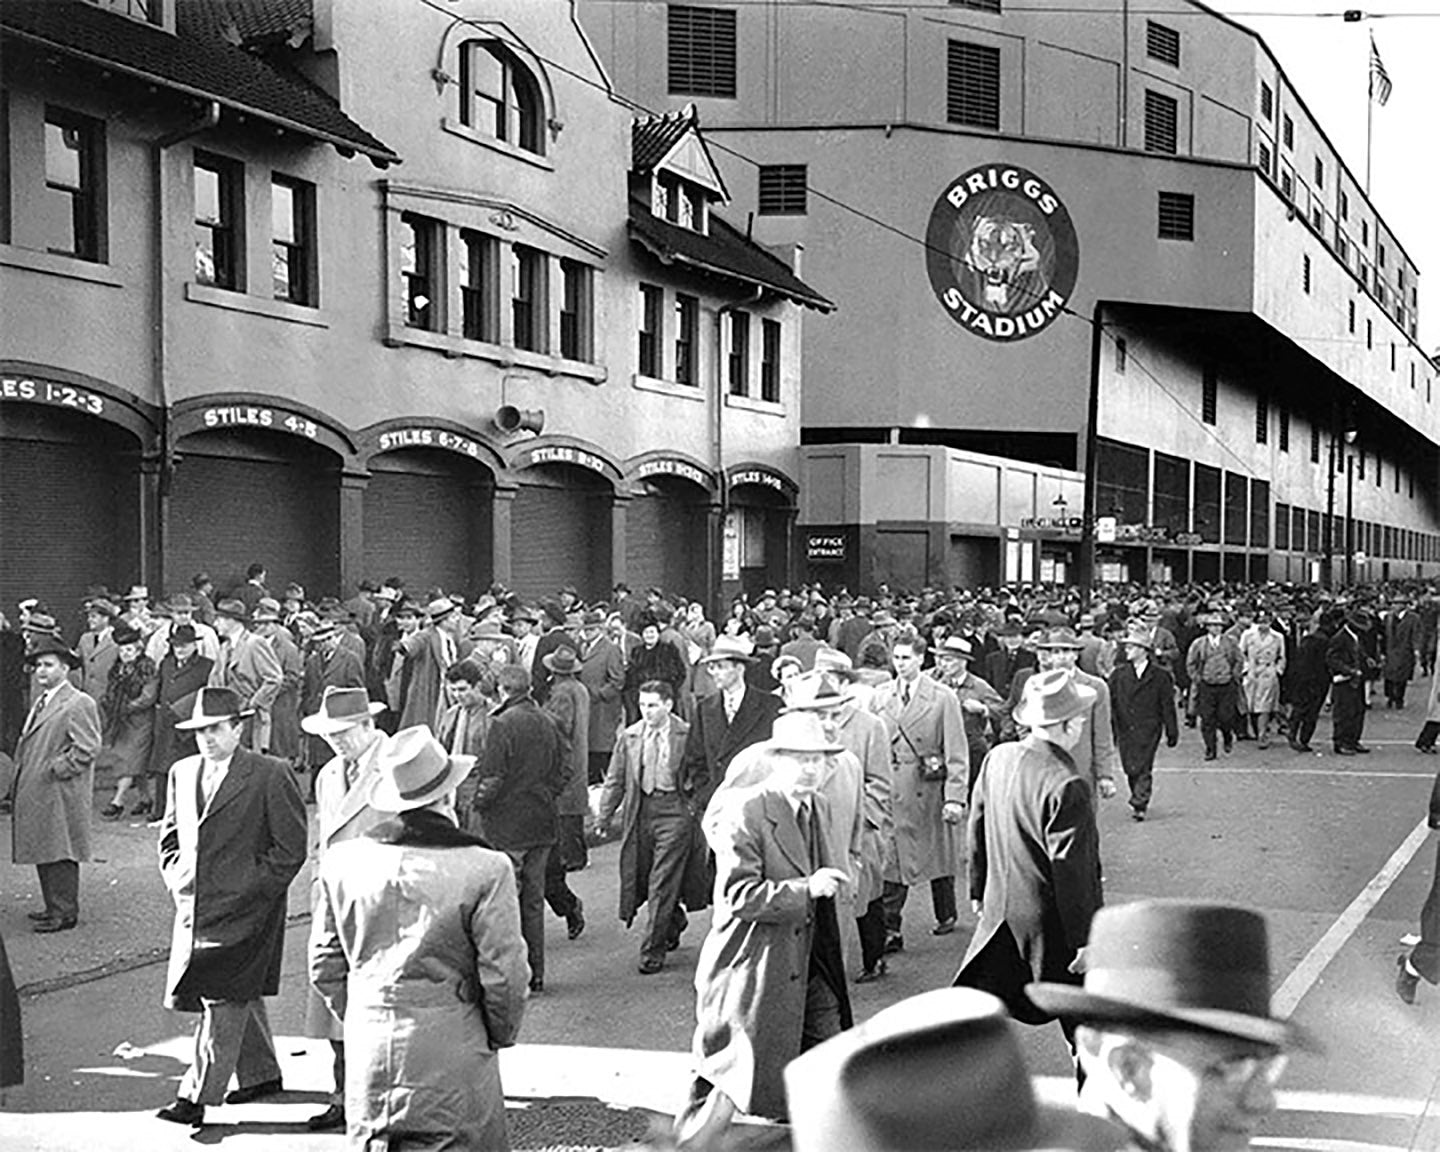 Briggs Stadium (1945) - Officially Licensed Detroit News Framed Photo